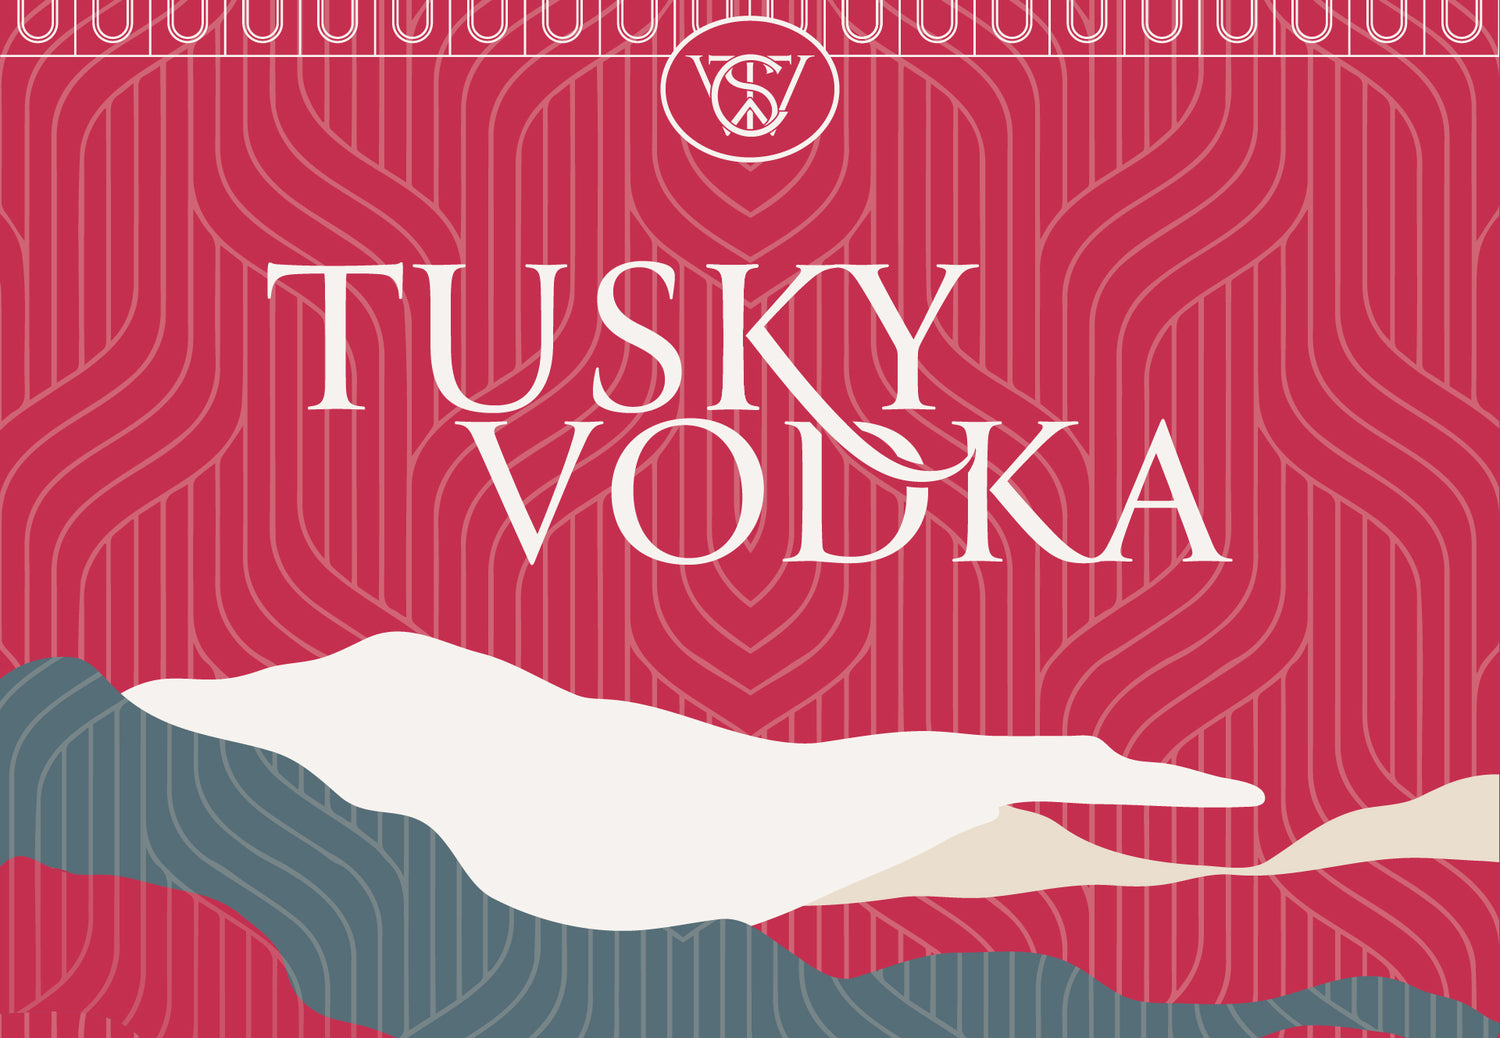 Tusky Vodka